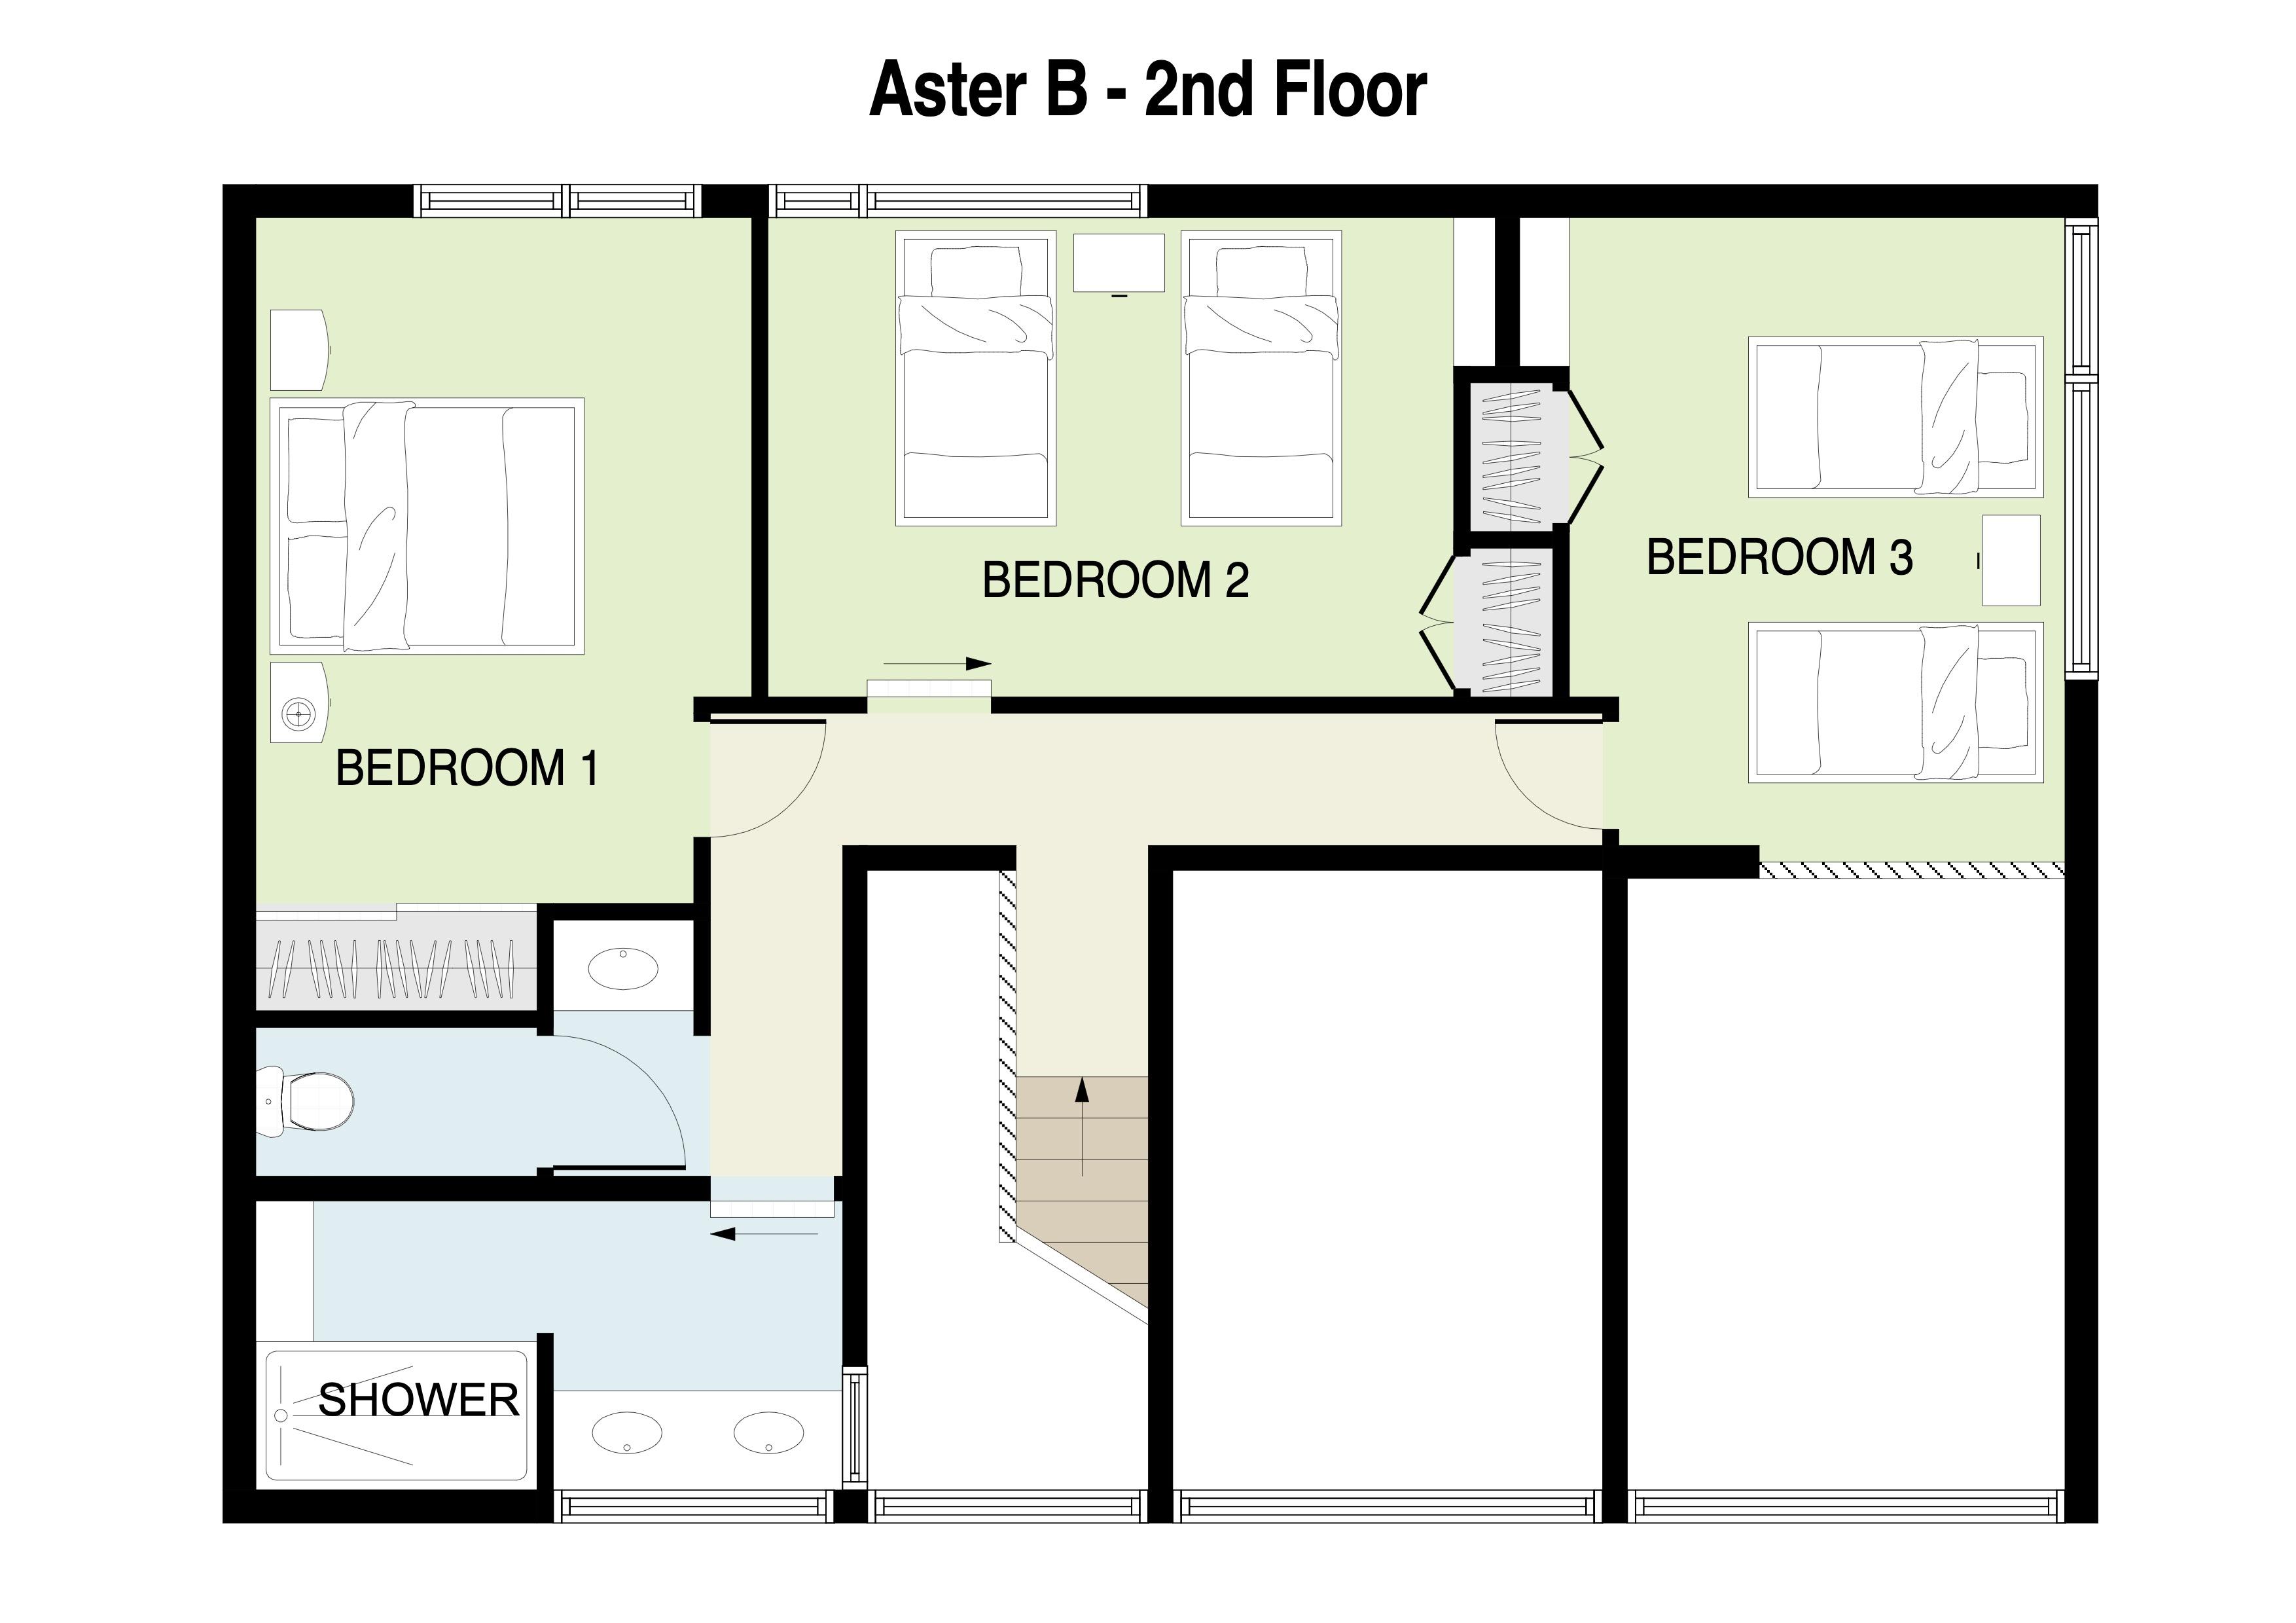 Aster B 2nd Floor plan